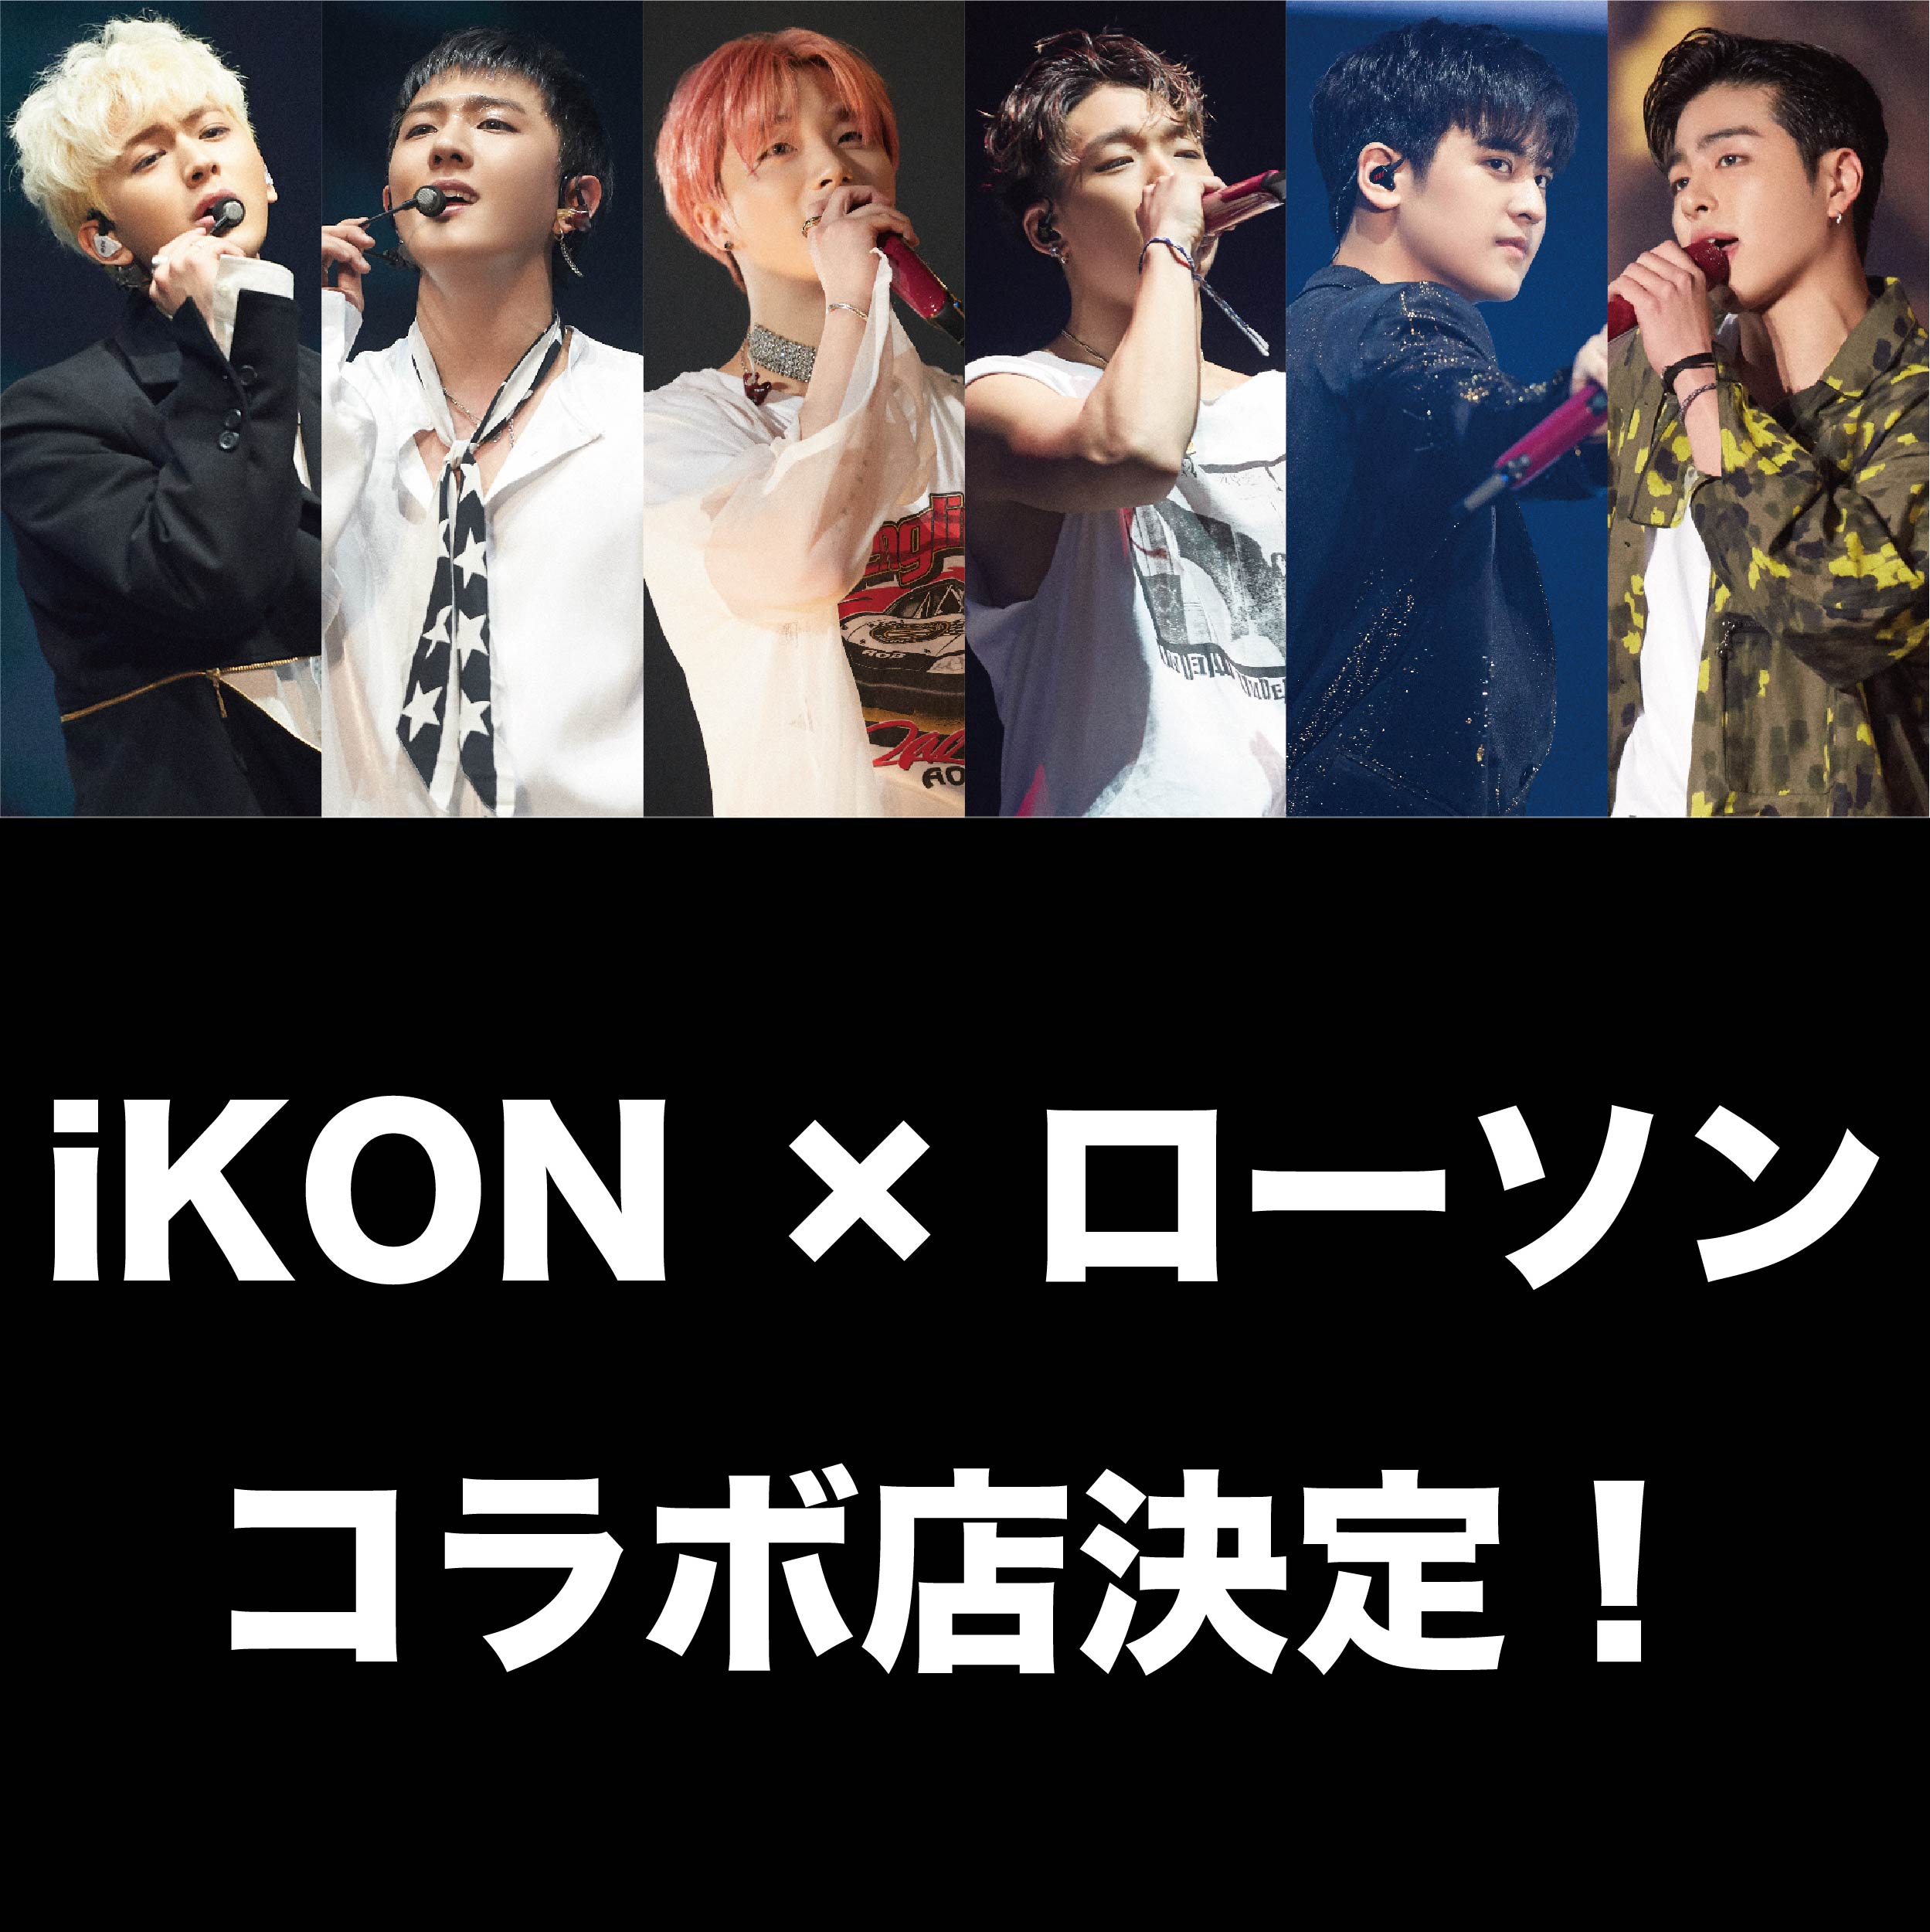 Ikon Japan Tour 19 開催記念 ローソンコラボ店企画決定